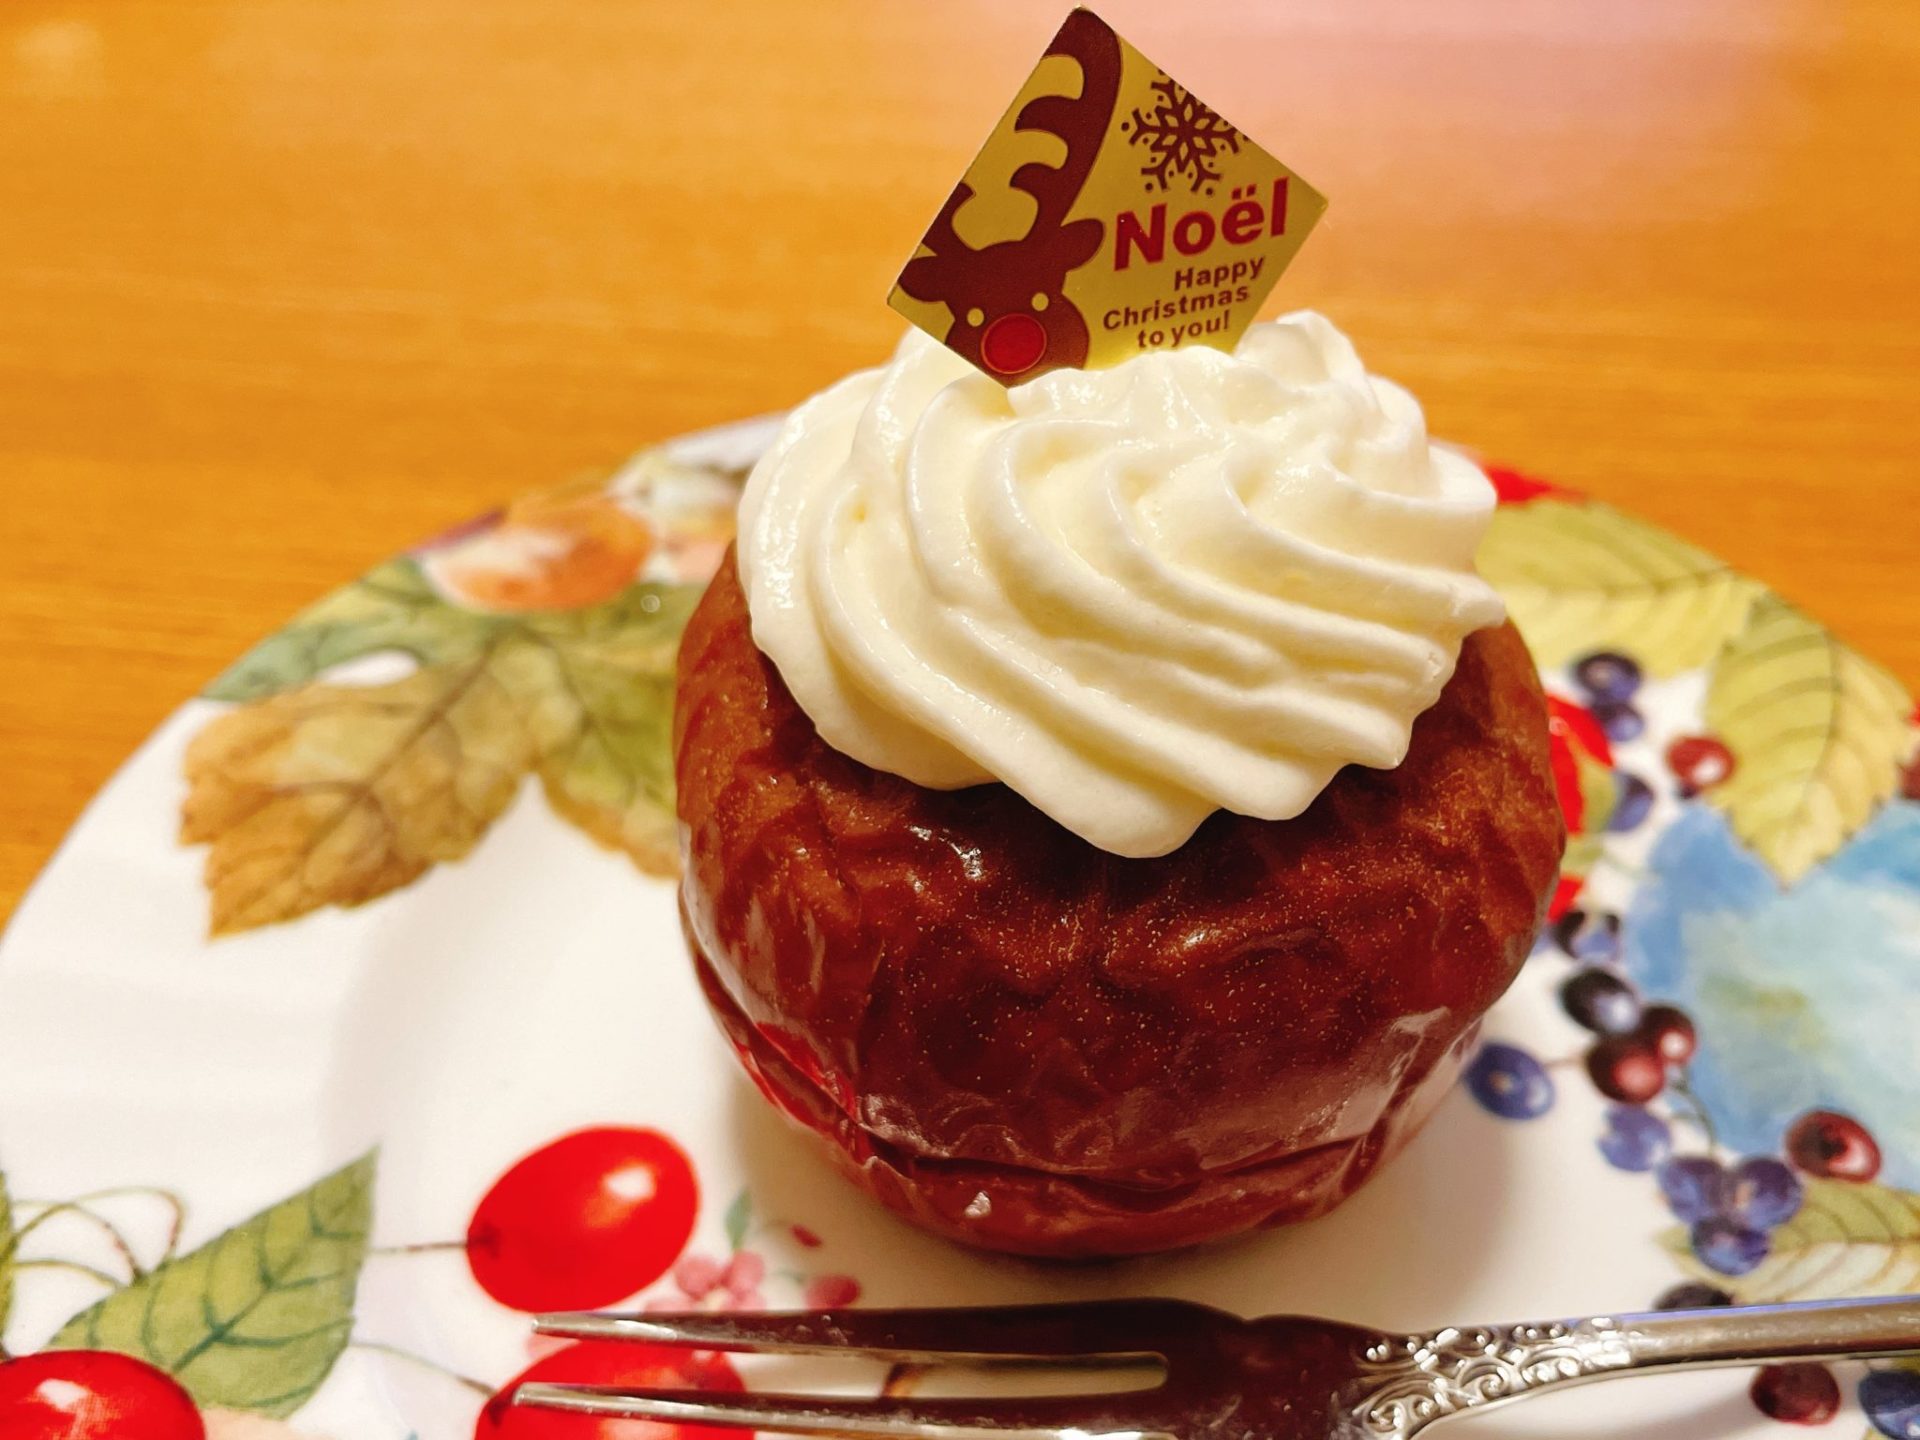 Zac ザック 下北沢 ケーキが超美味しいカフェ 世田谷ローカル Setagaya Local